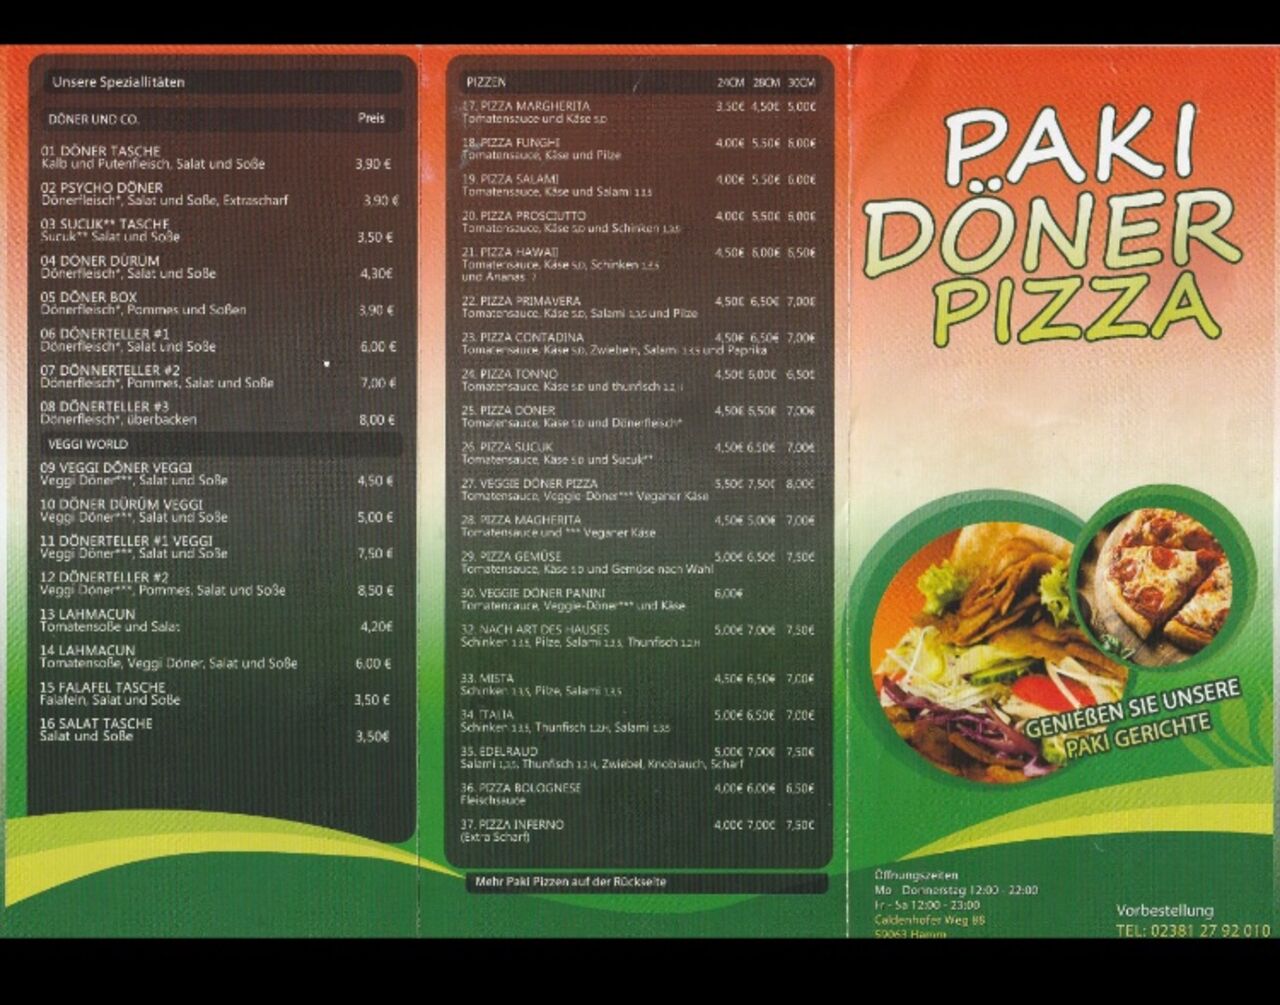 A photo of Paki Döner Pizza